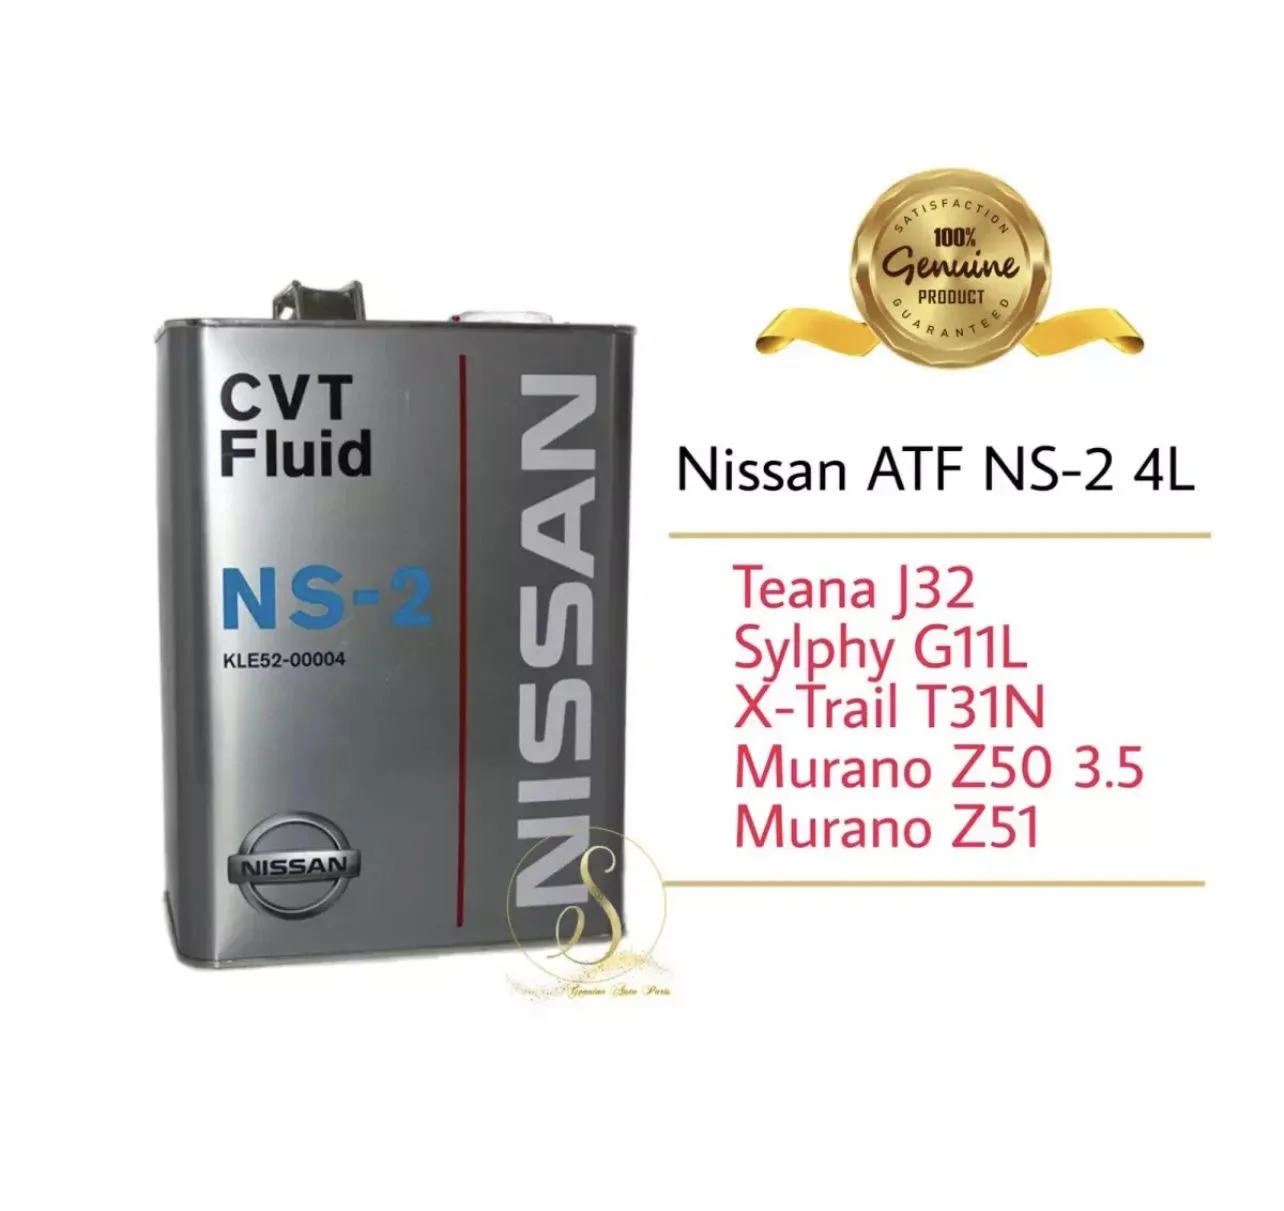 ( 100% ORIGINAL ) Nissan CVT ATF NS2 4L Teana Sylphy X-Trail Murano Auto Transmission Fluid Auto Oil KLE52-00004 NS 2